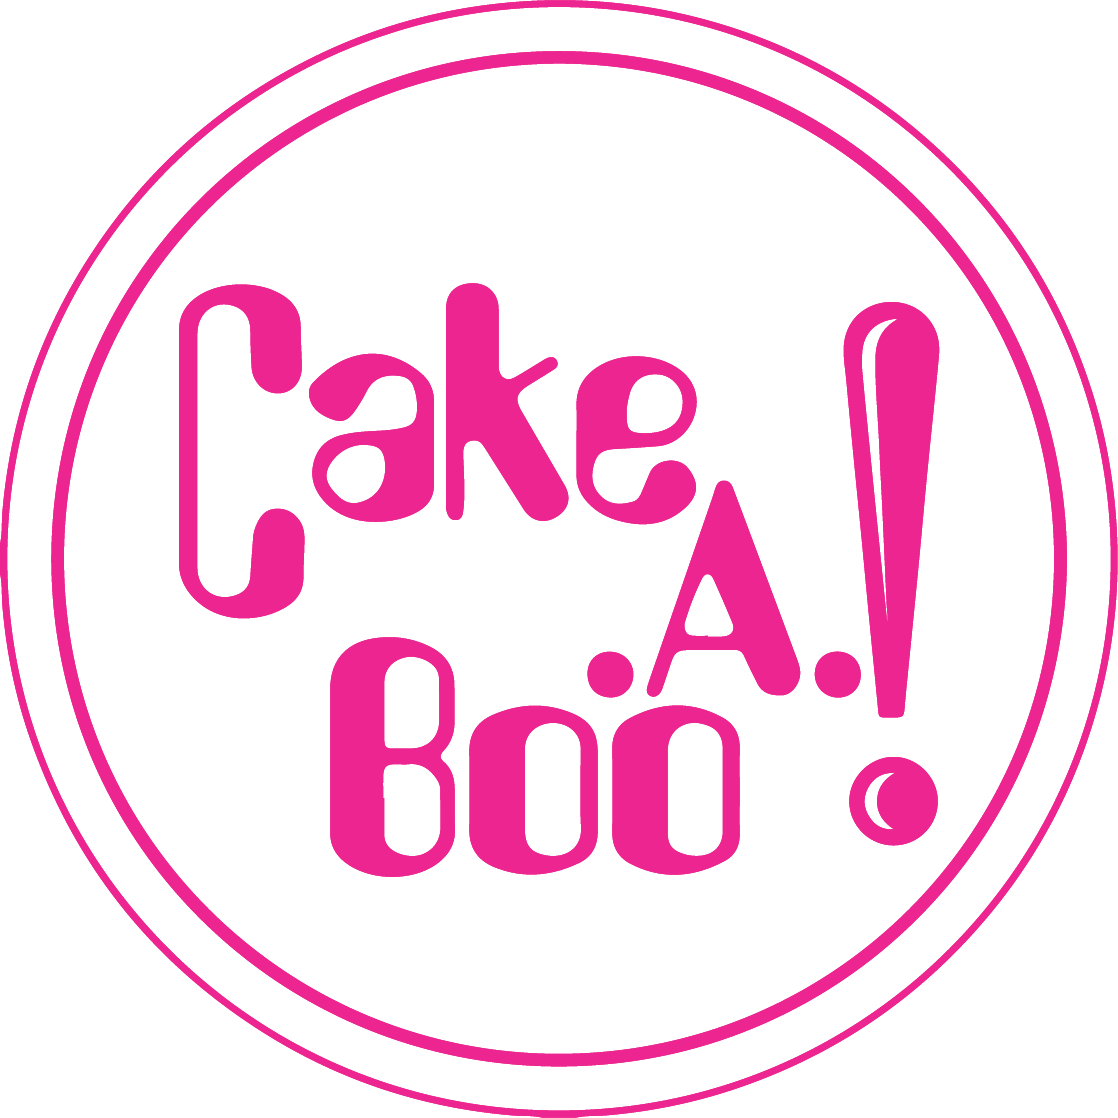 Cake-A-Boo